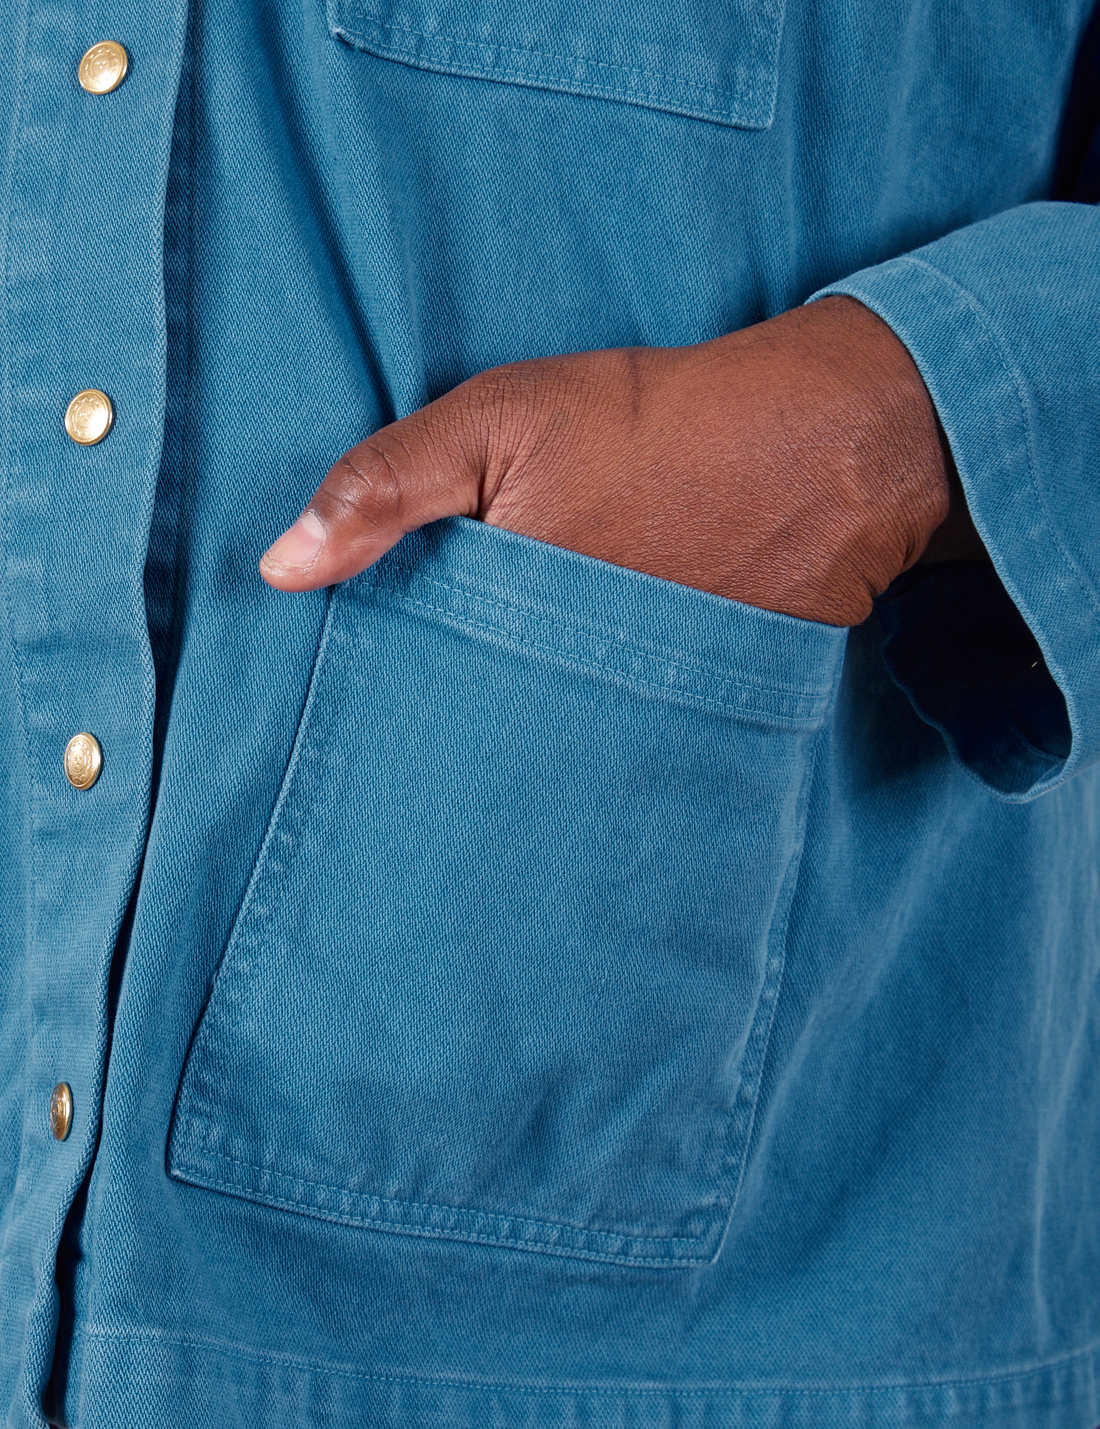 Denim Work Jacket in Marine Blue hand in bottom front pocket close up on Elijah